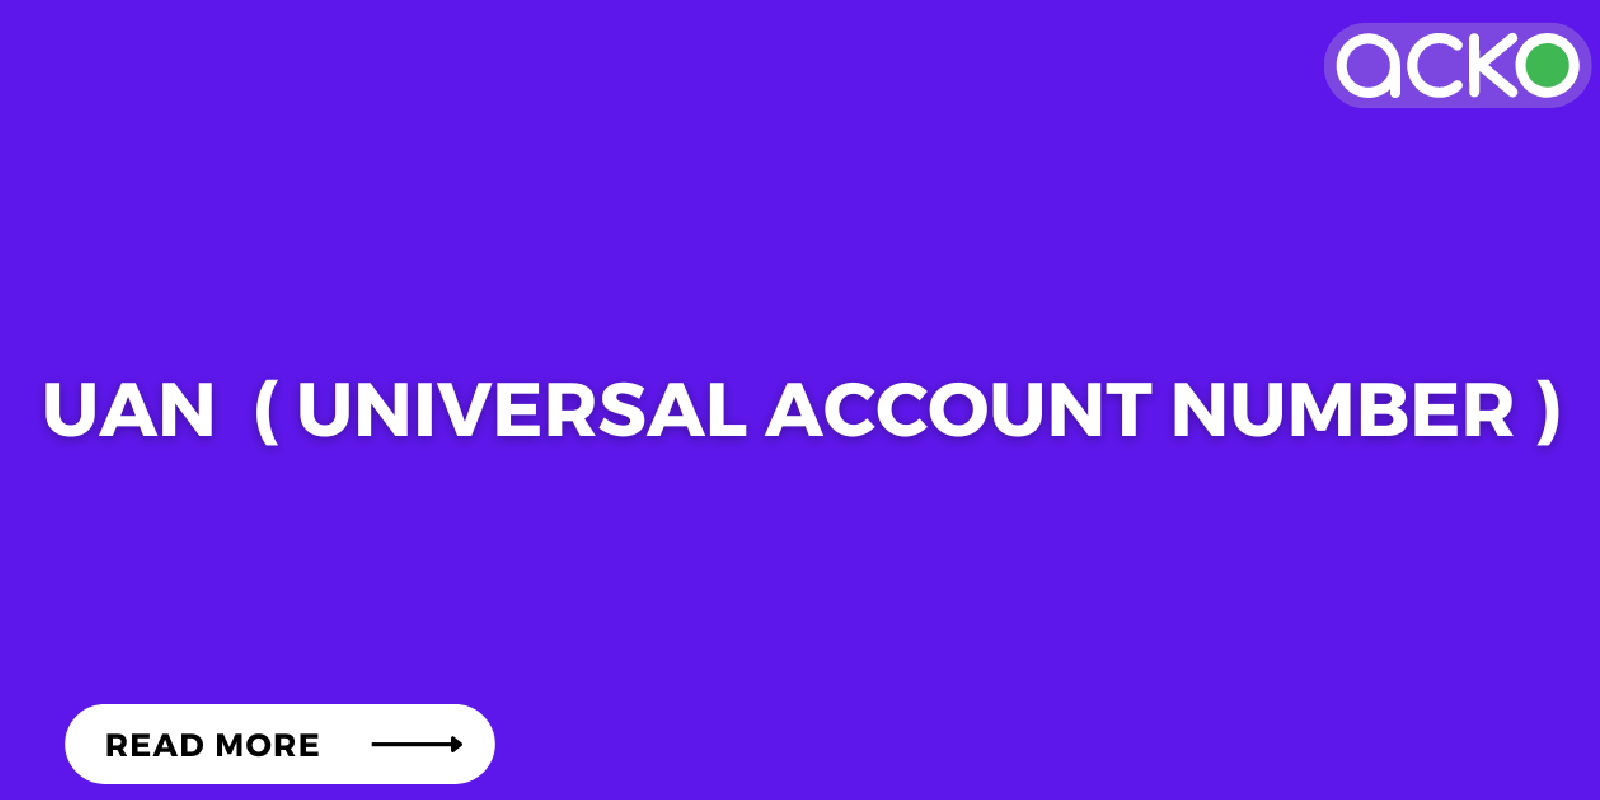 uan-universal-account-number-1